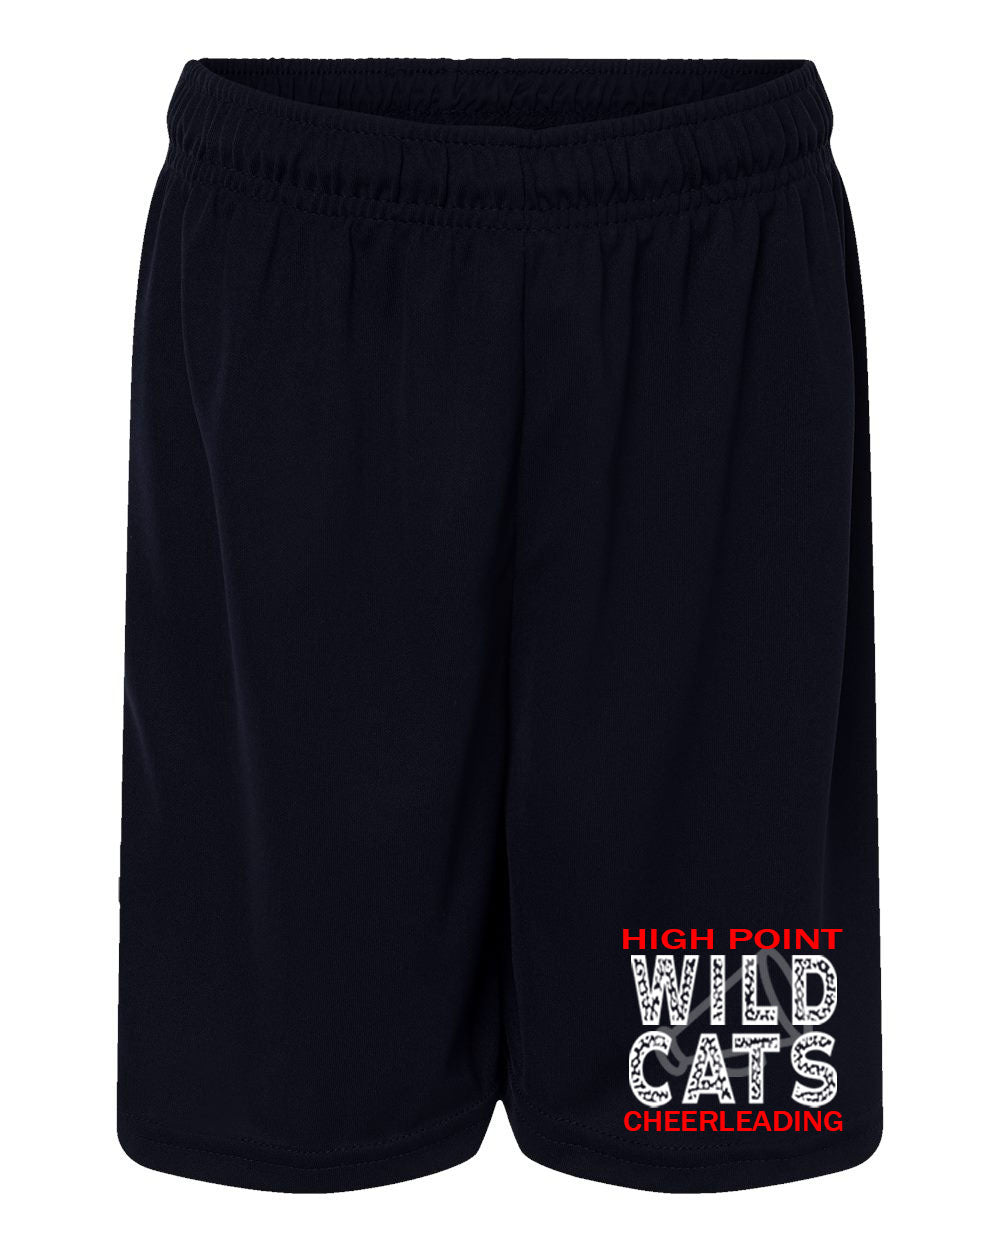 Wildcats Cheer Design 1 Performance Shorts